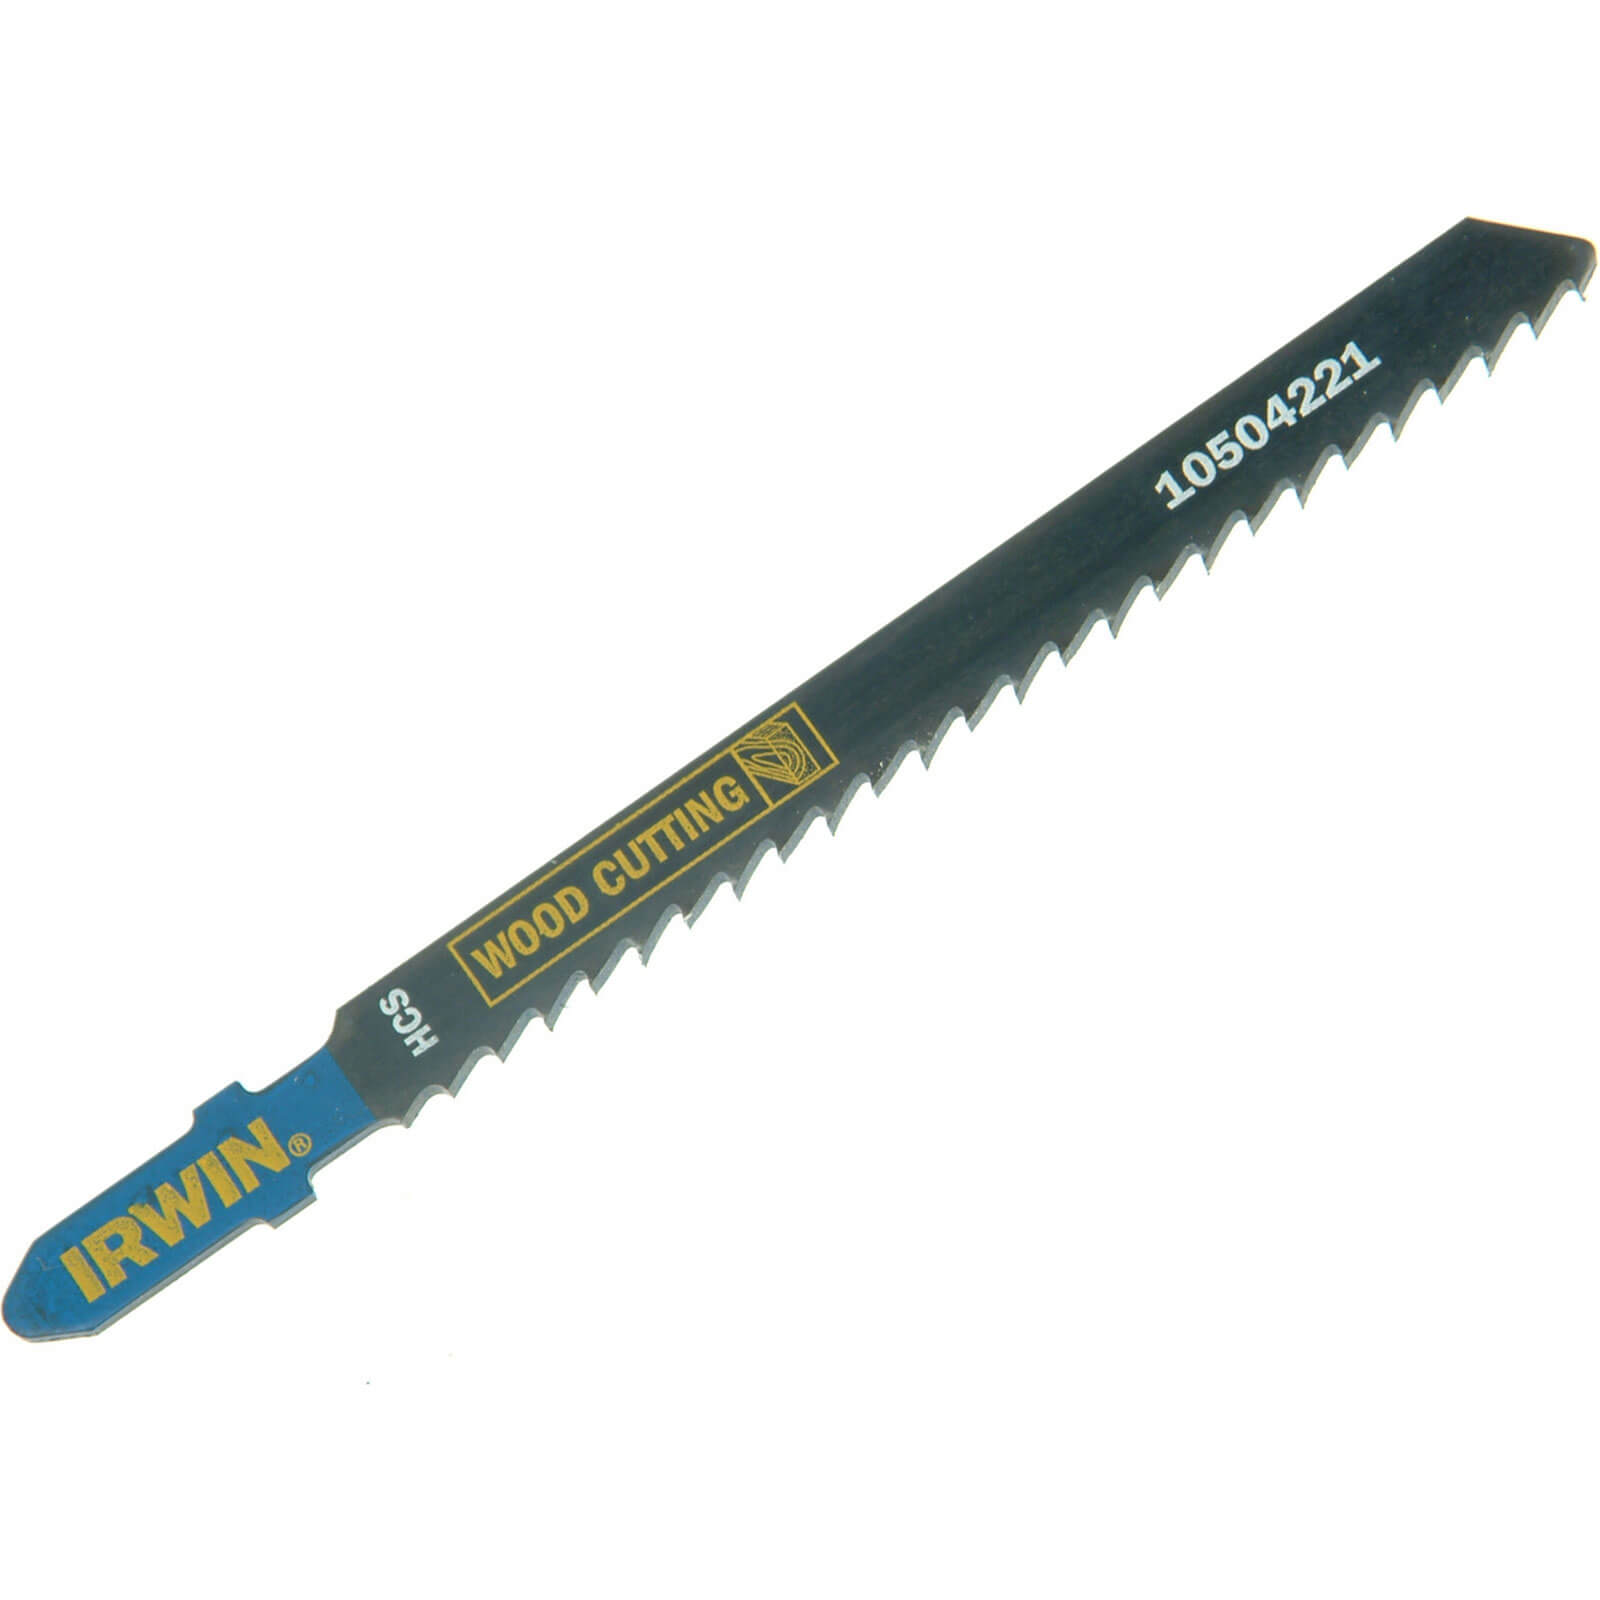 Photos - Power Tool Accessory IRWIN T101AO Wood Cutting Jigsaw Blades Pack of 5 IRW10504226 